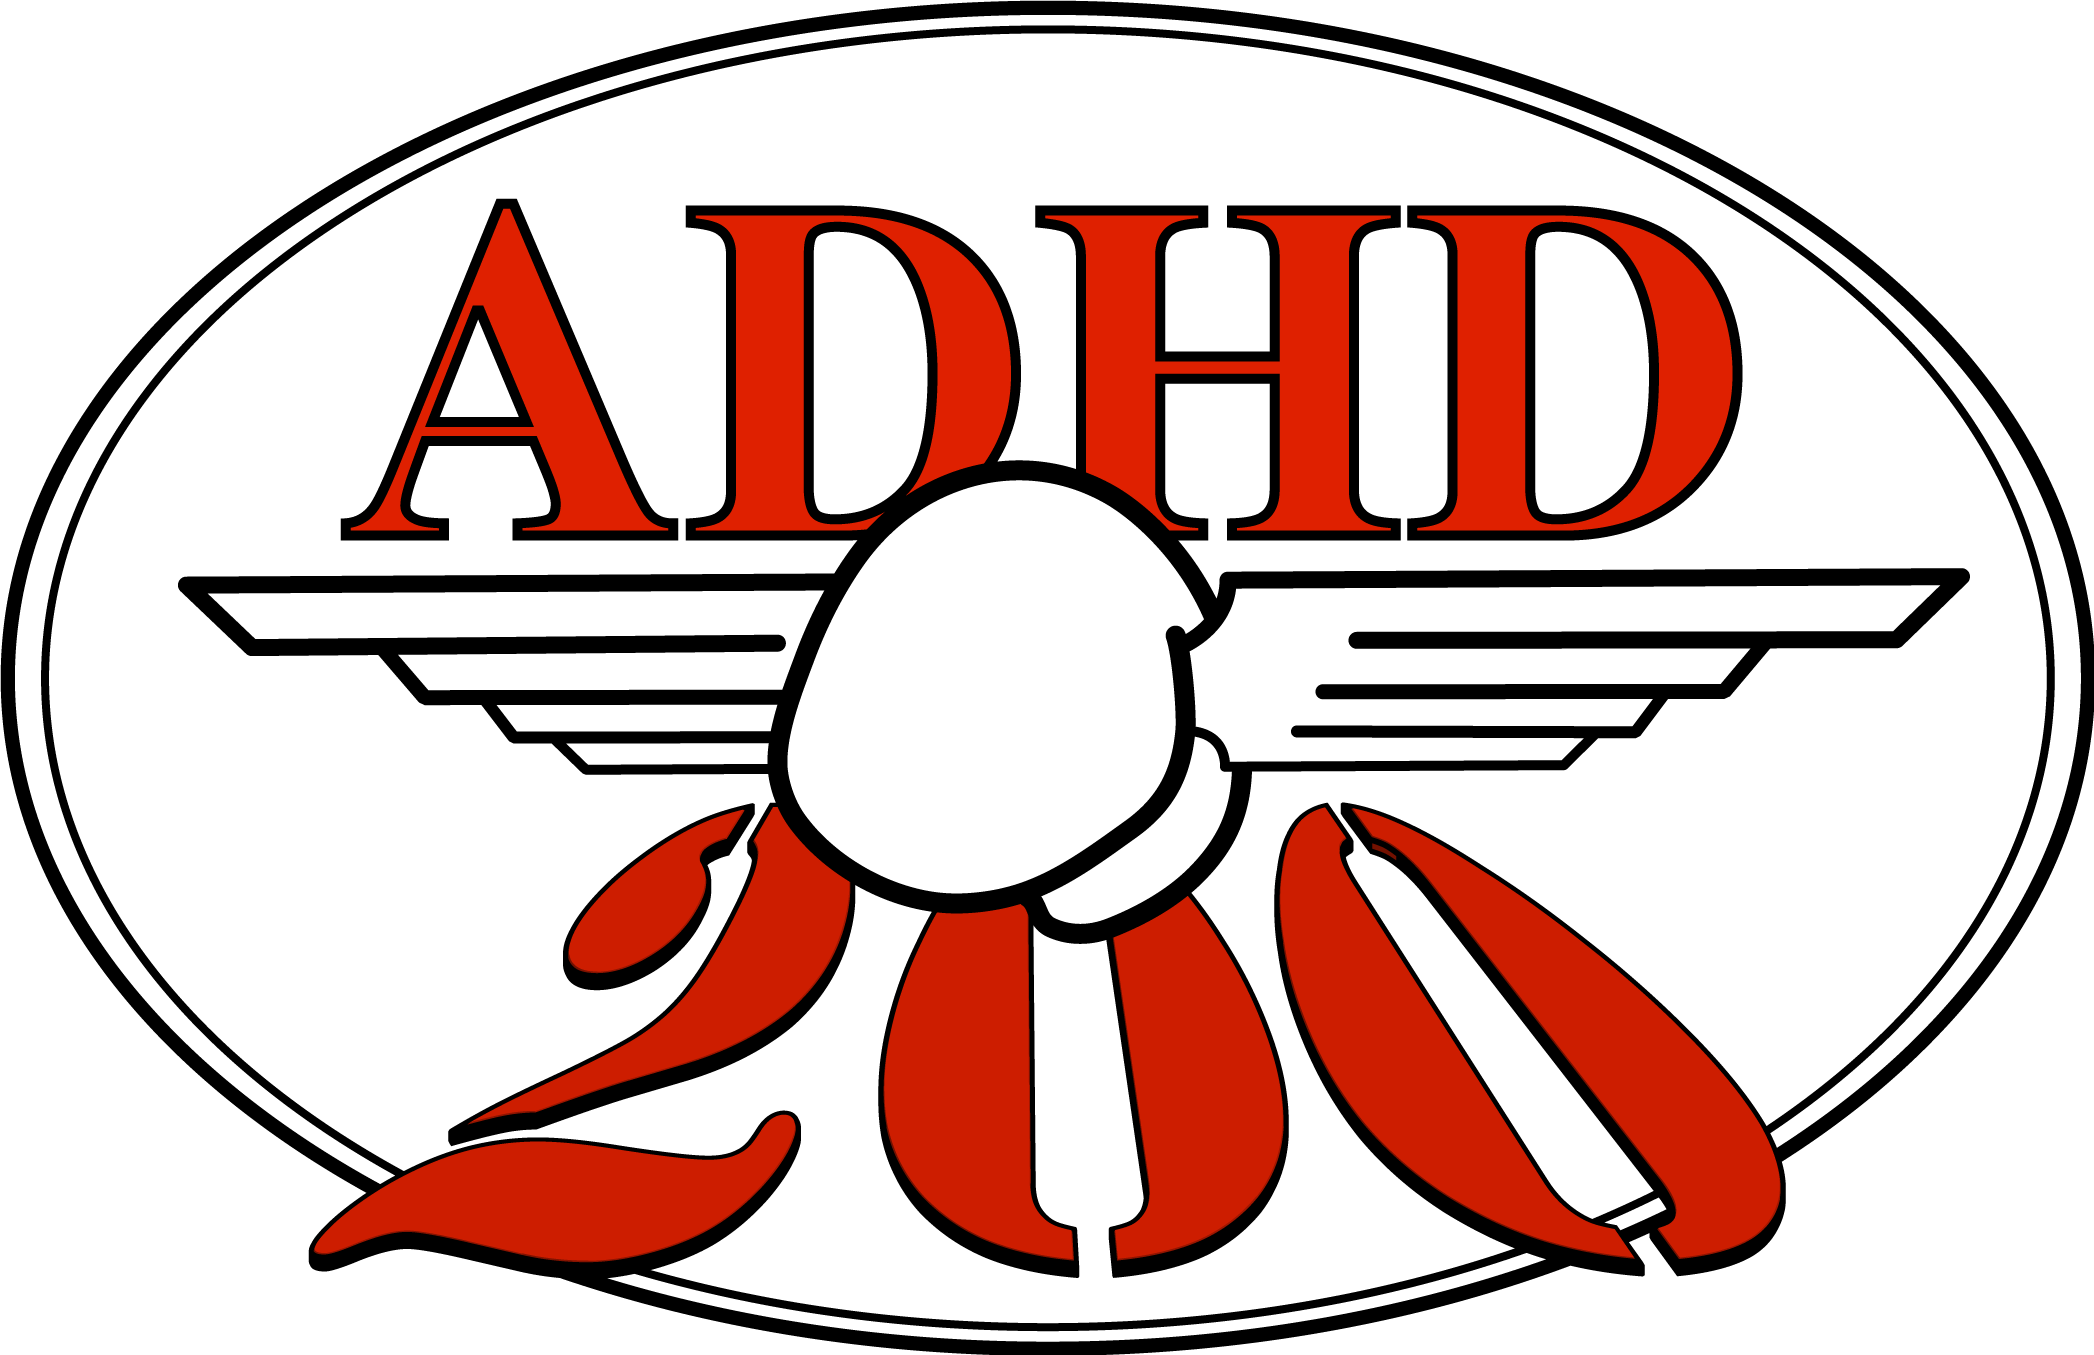 ADHD200_logo.png